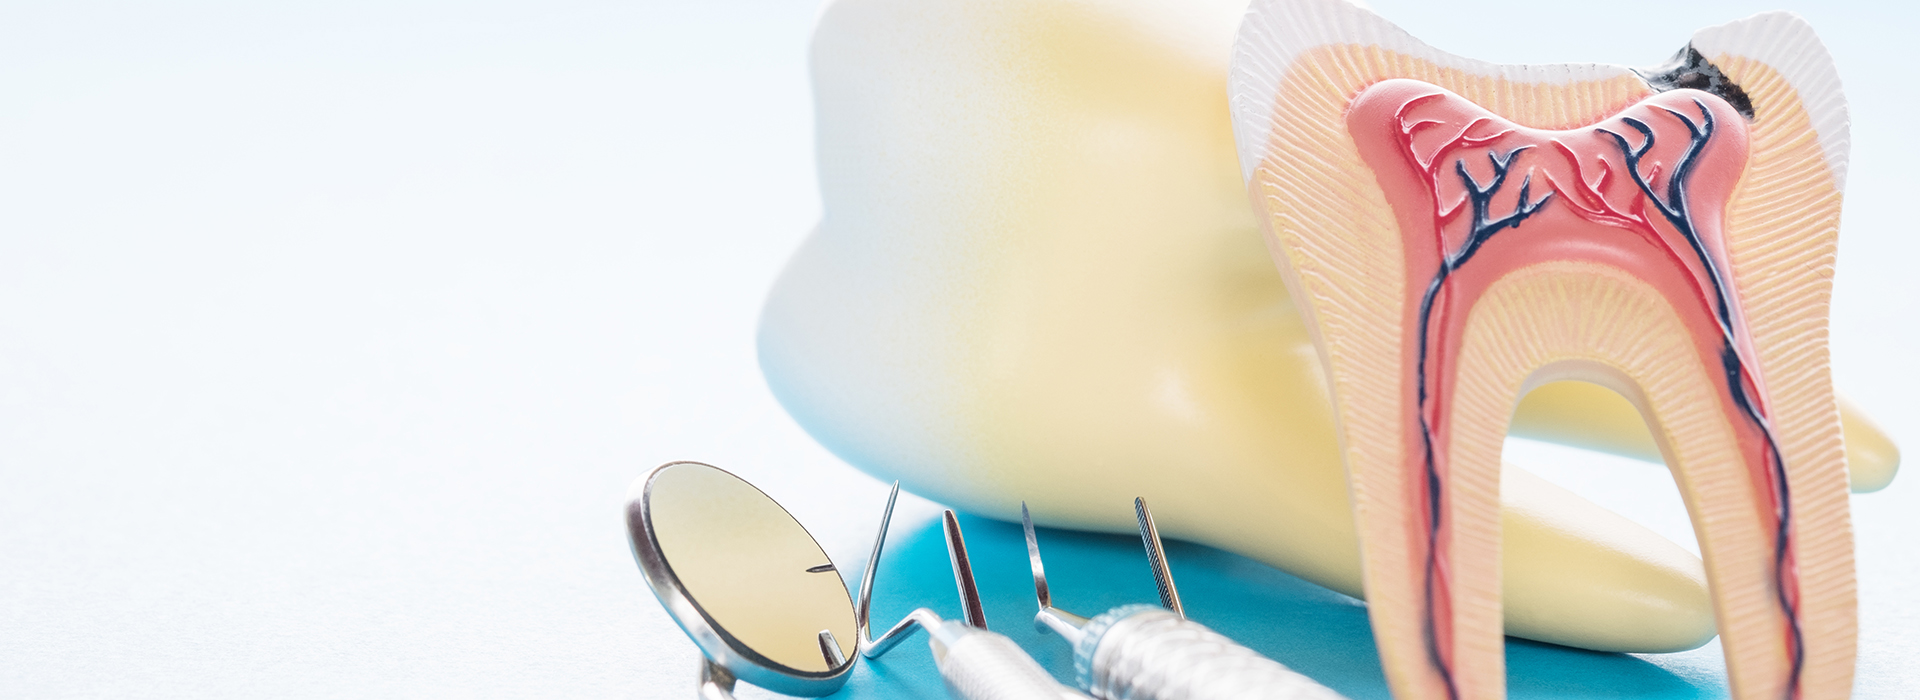 Benecchi Dental Group | Veneers, Periodontal Treatment and Crowns  amp  Caps